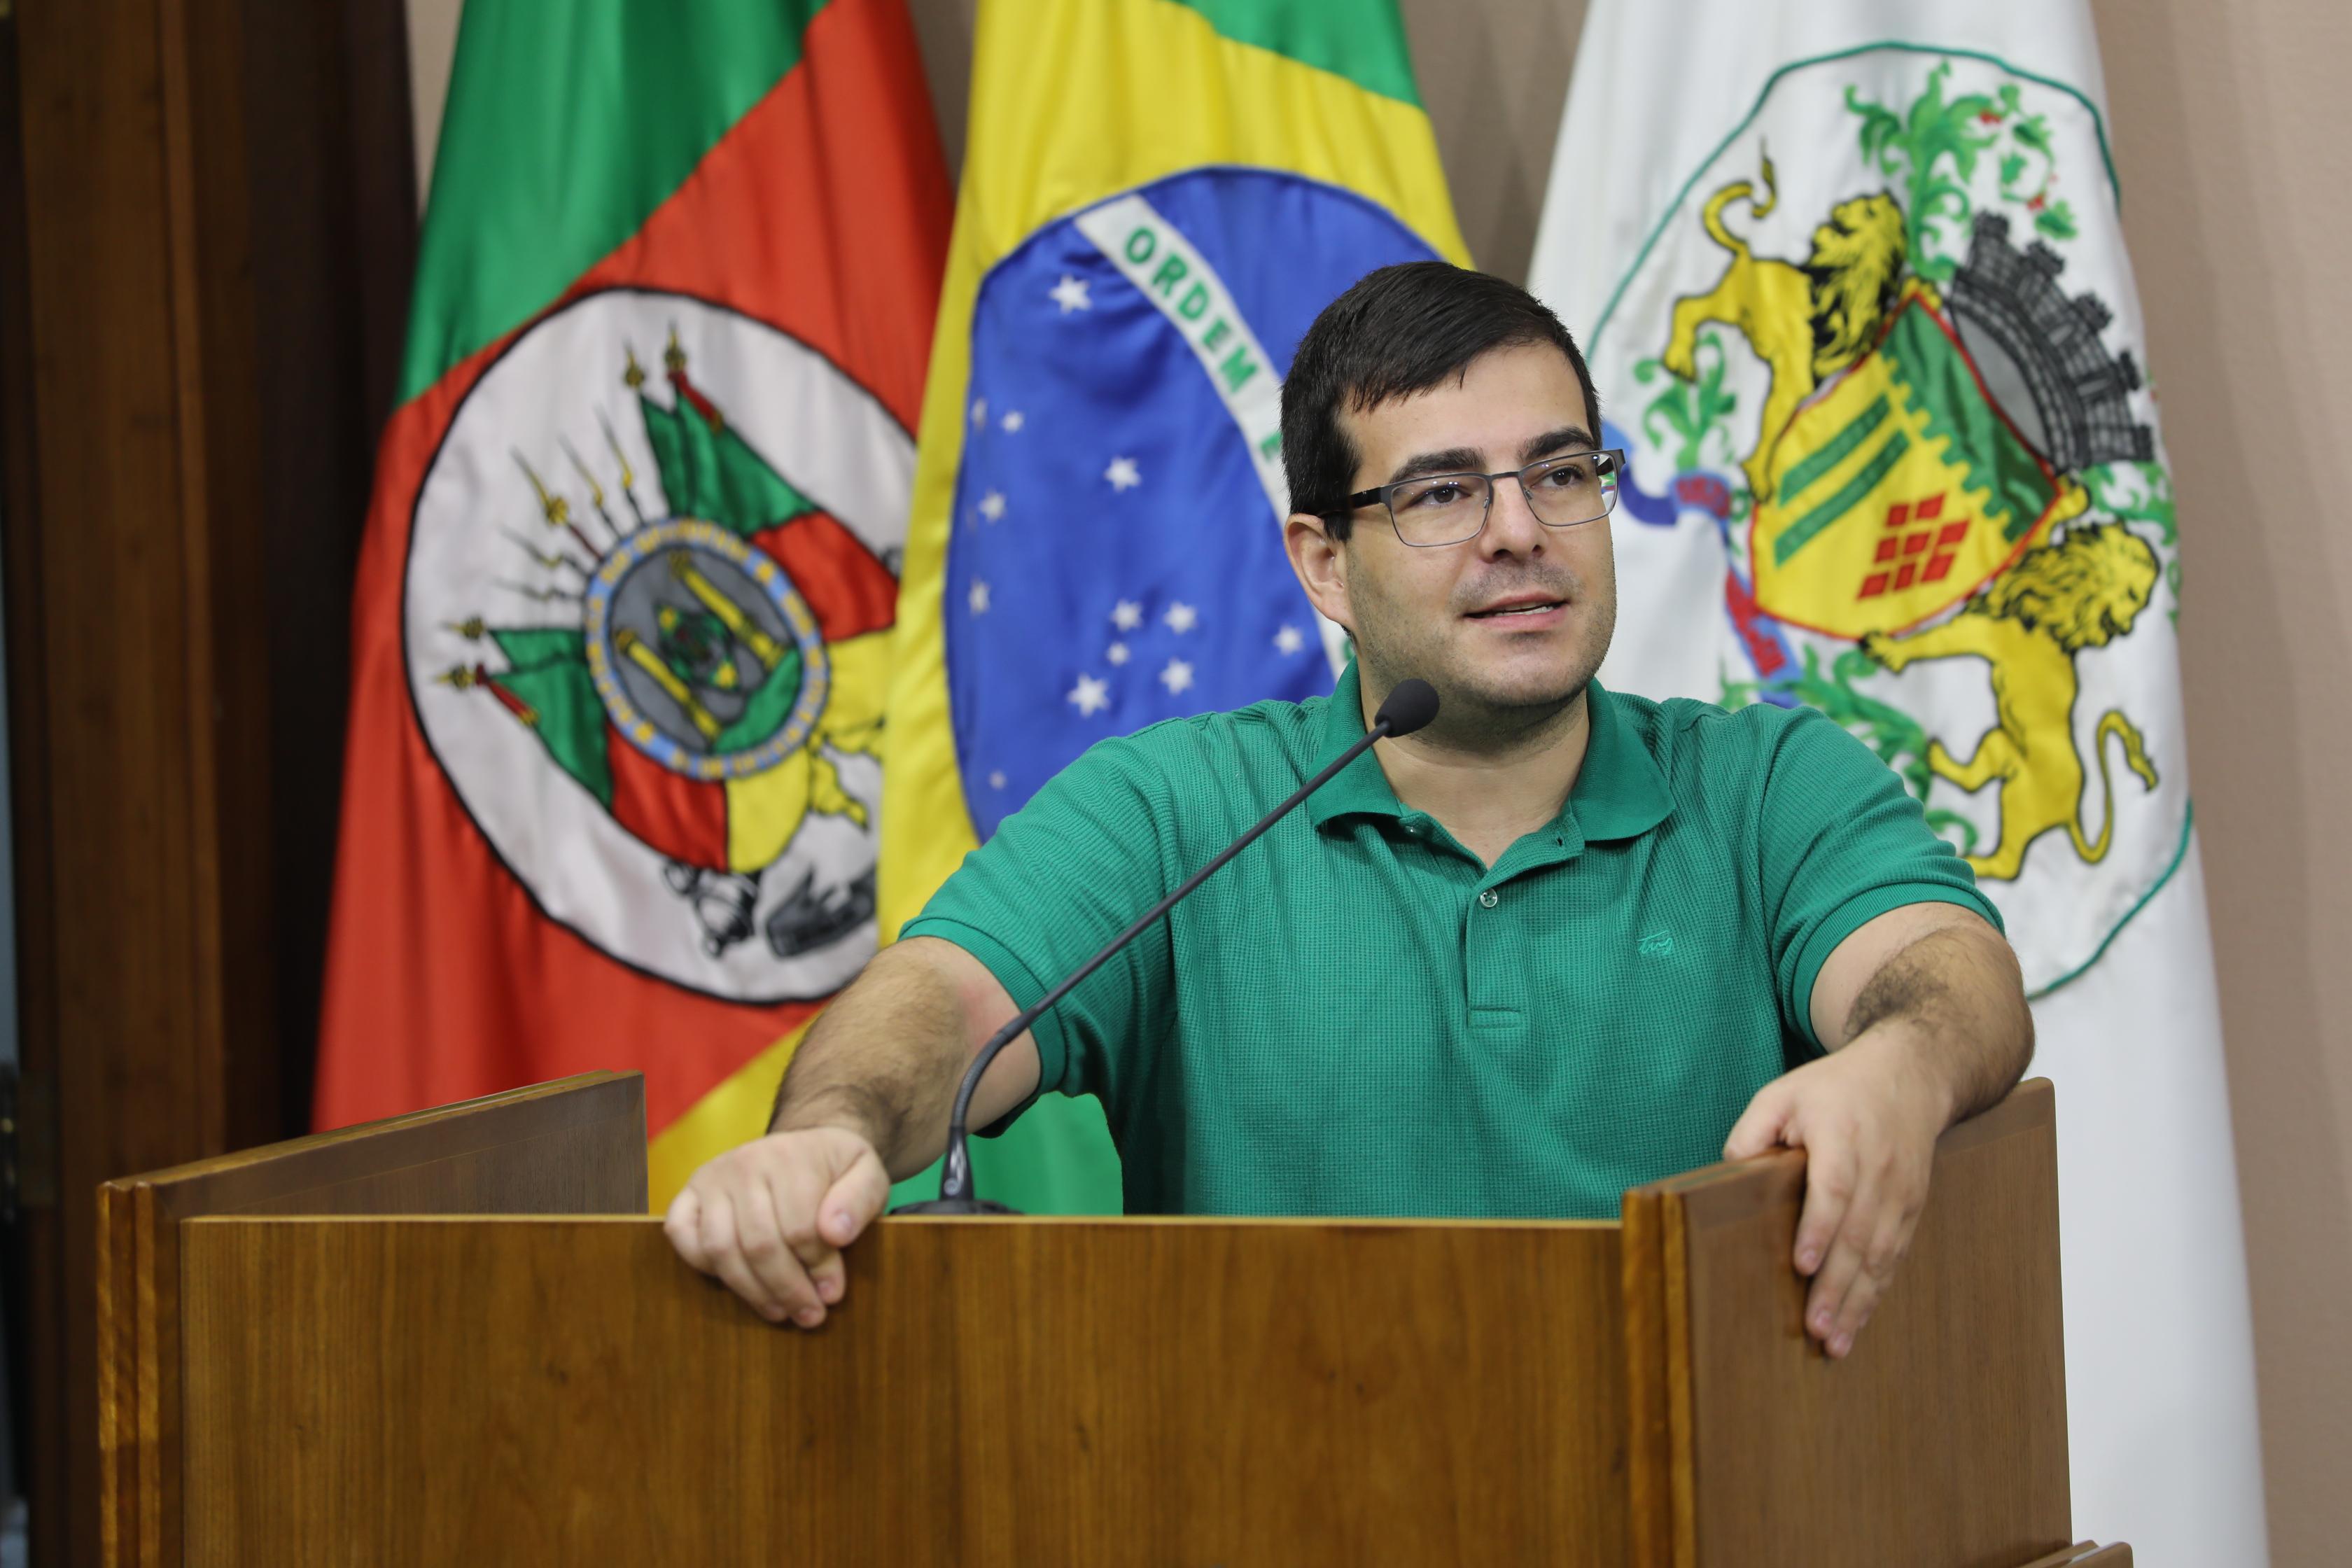 Rafael Bueno critica a gestão da Prefeitura Municipal